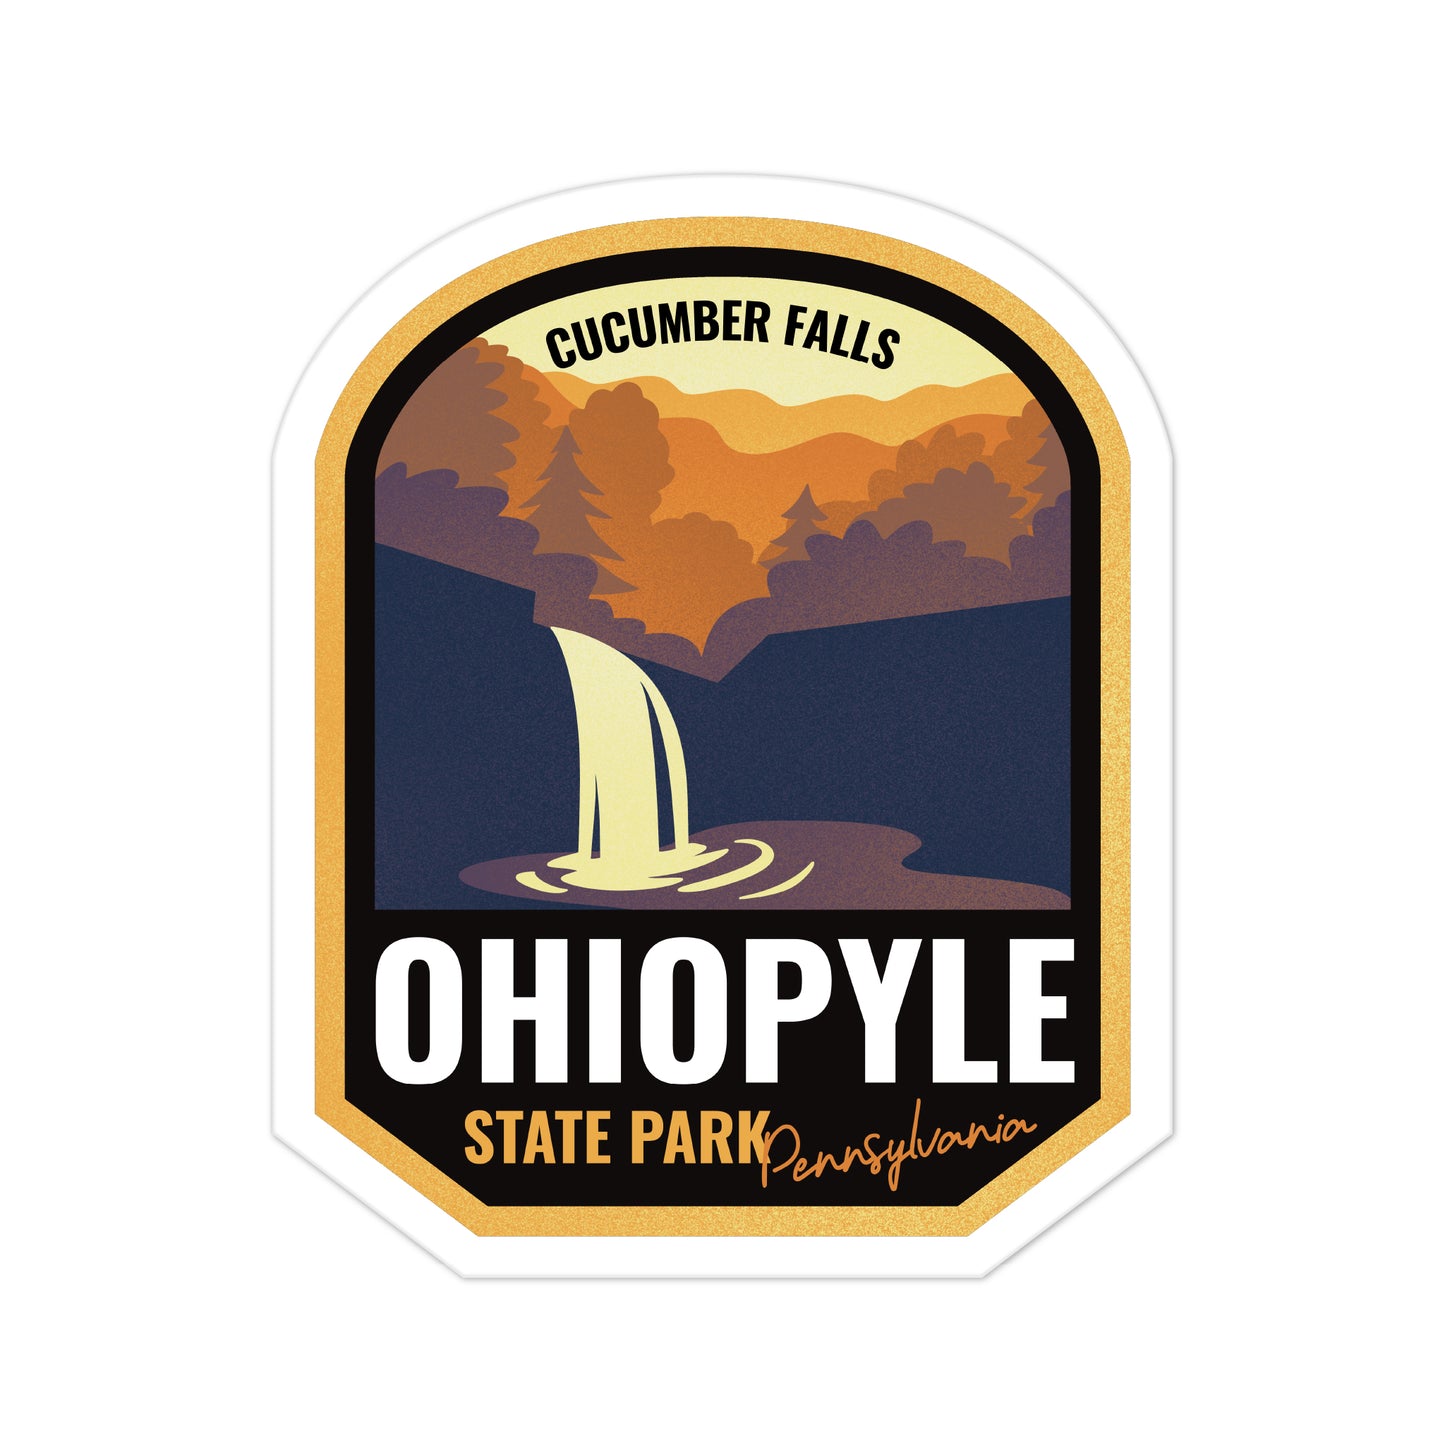 A sticker of Ohiopyle State Park